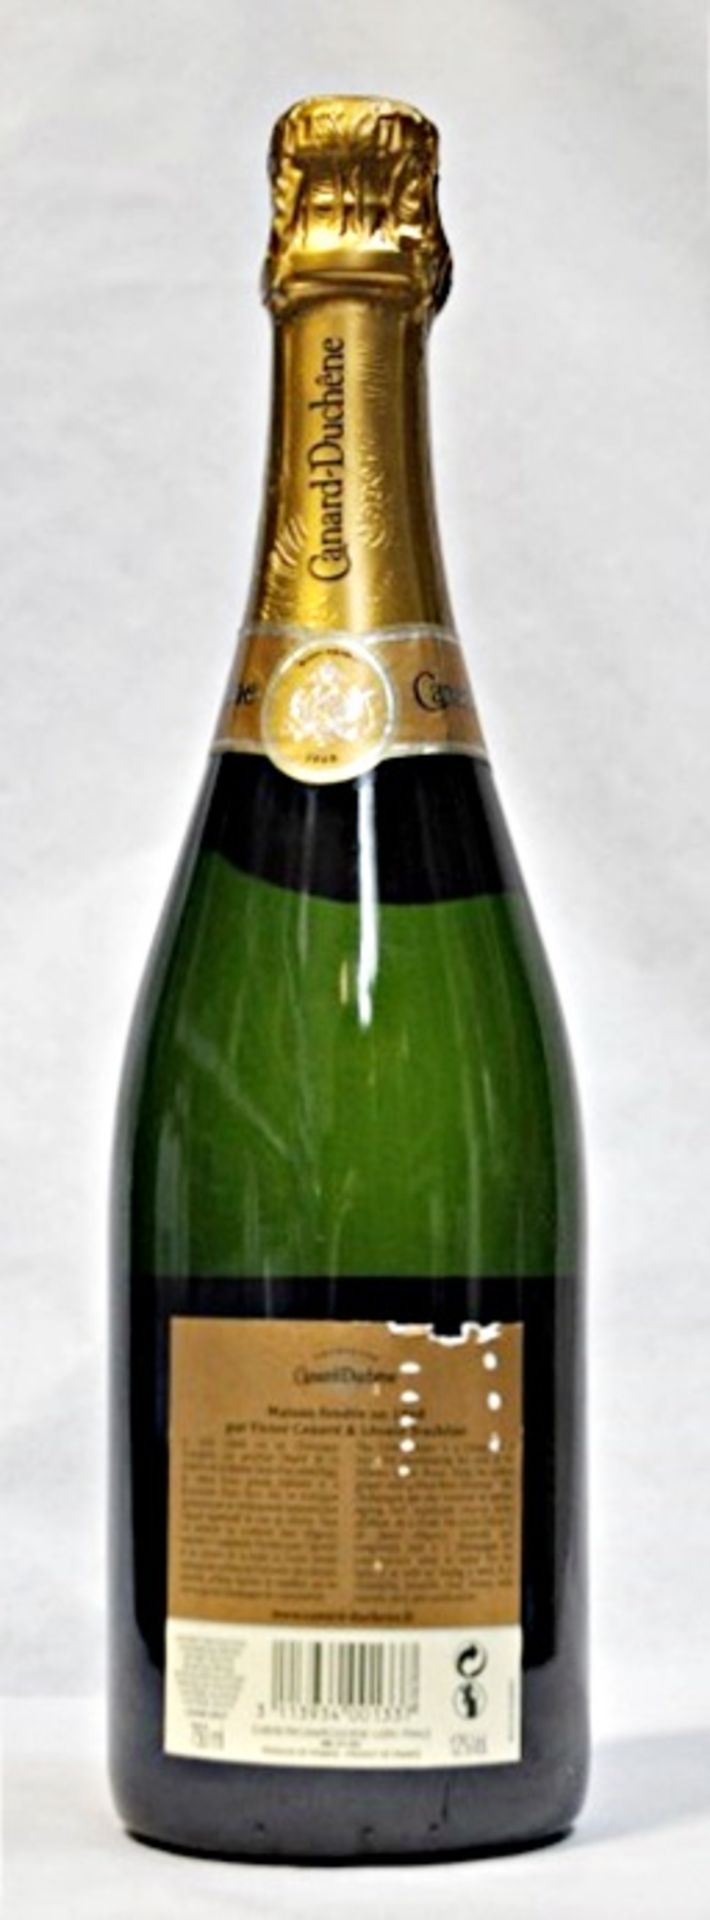 1 x Canard-Duchene Cuvee Leonie Brut, Champagne, France – NV - Bottle Size 75cl – Volume 12% - Ref - Image 4 of 5